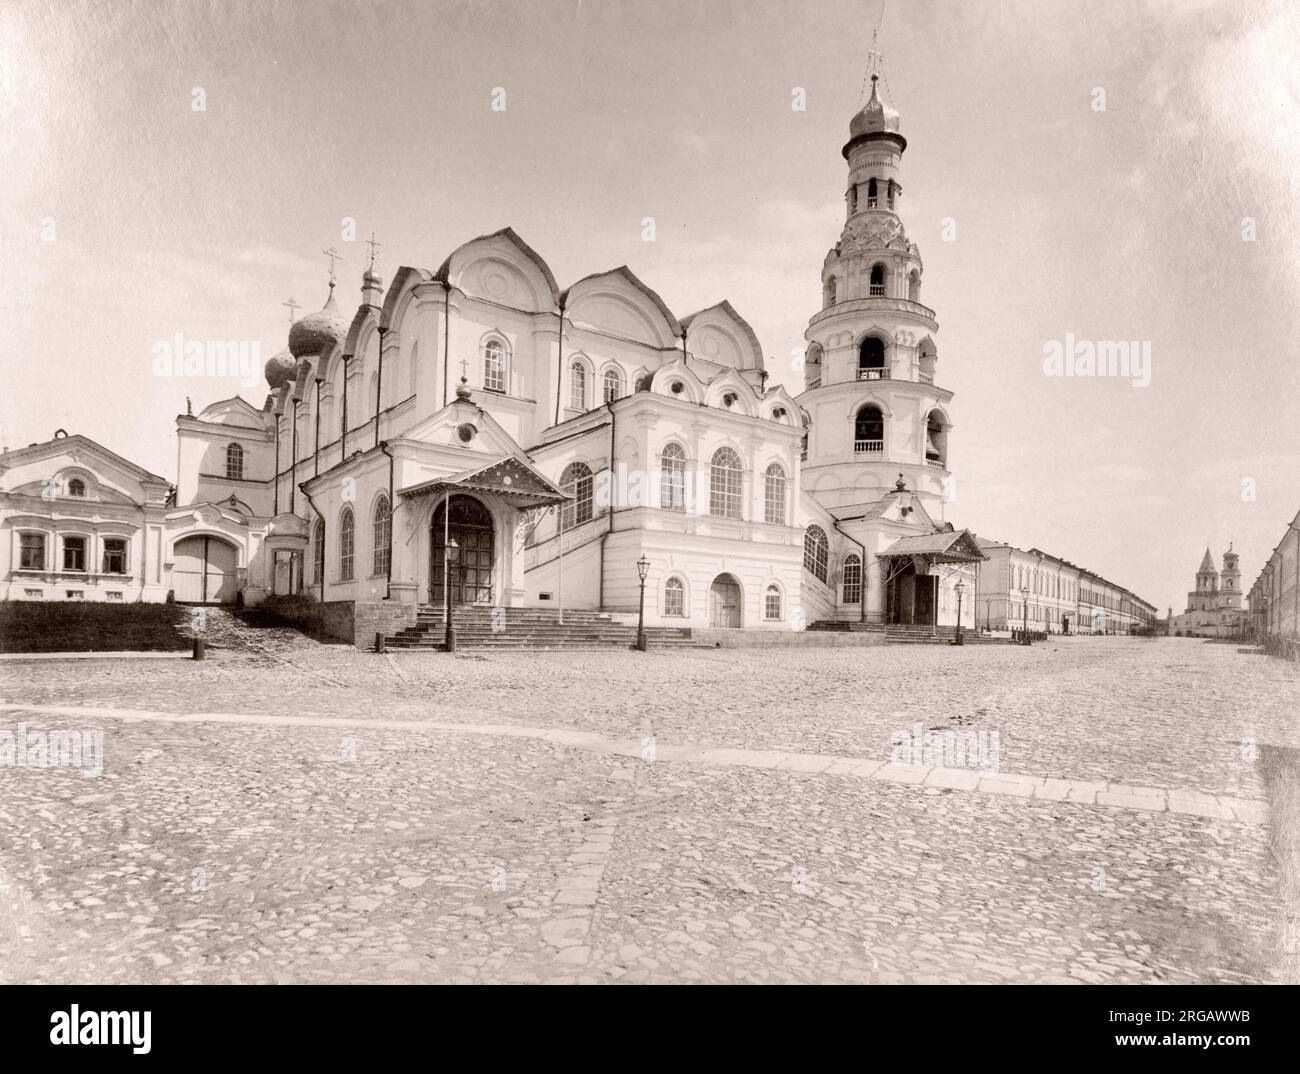 19th century vintage photograph Russia - Kazan Kremlin Tartarstan.  The Kazan Kremlin (Russian: ÃÂšÃÂ°ÃÂ·ÃÂ°ÃÂ½Ã‘ÂÃÂºÃÂ¸ÃÂ¹ ÃÂšÃ‘Â€ÃÂµÃÂ¼ÃÂ»Ã‘ÂŒ; Tatar: Cyrillic ÃÂšÃÂ°ÃÂ·ÃÂ°ÃÂ½ ÃÂºÃÂ¸Ã‘Â€ÃÂ¼Ã“Â™ÃÂ½ÃÂµ, Latin Qazan kirmÃƒÂ¤ne) is the chief historic citadel of Tatarstan, situated in the city of Kazan. It was built at the behest of Ivan the Terrible on the ruins of the former castle of Kazan khans. Stock Photo